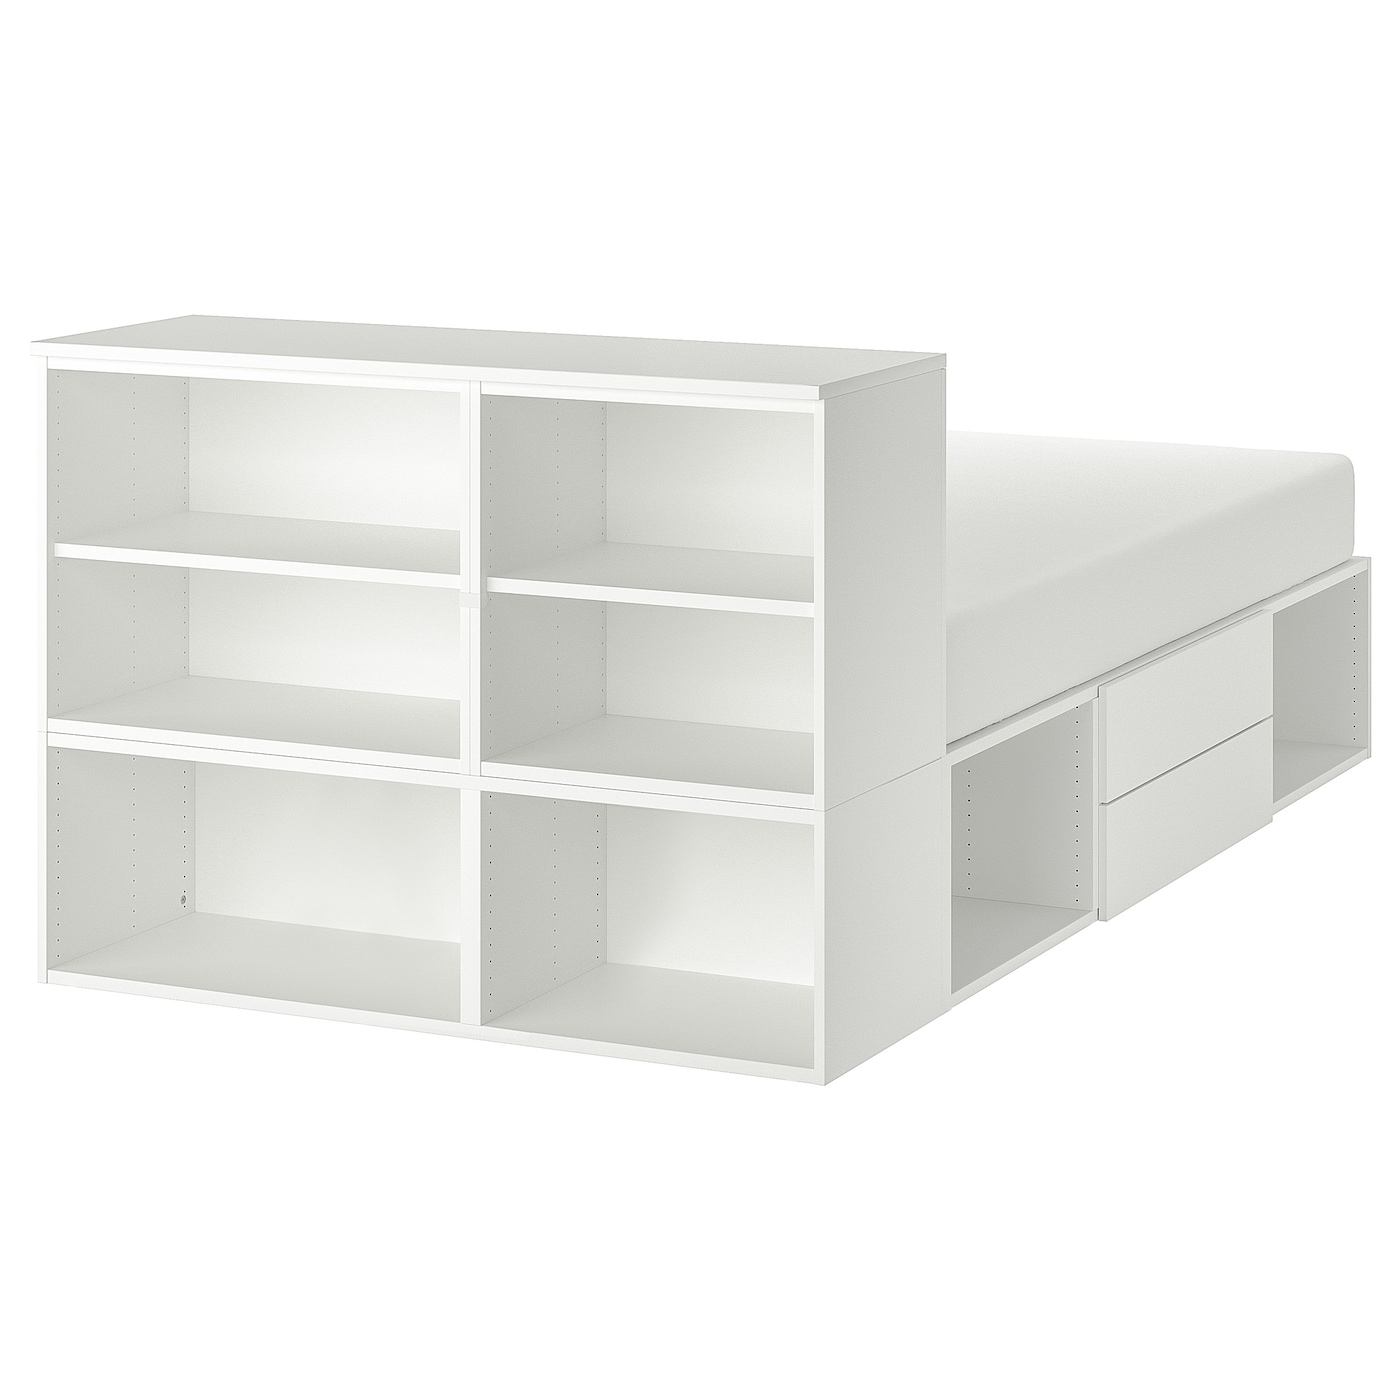 Каркас кровати с 2 ящиками - IKEA PLATSA, 200х140 см, белый, ПЛАТСА ИКЕА